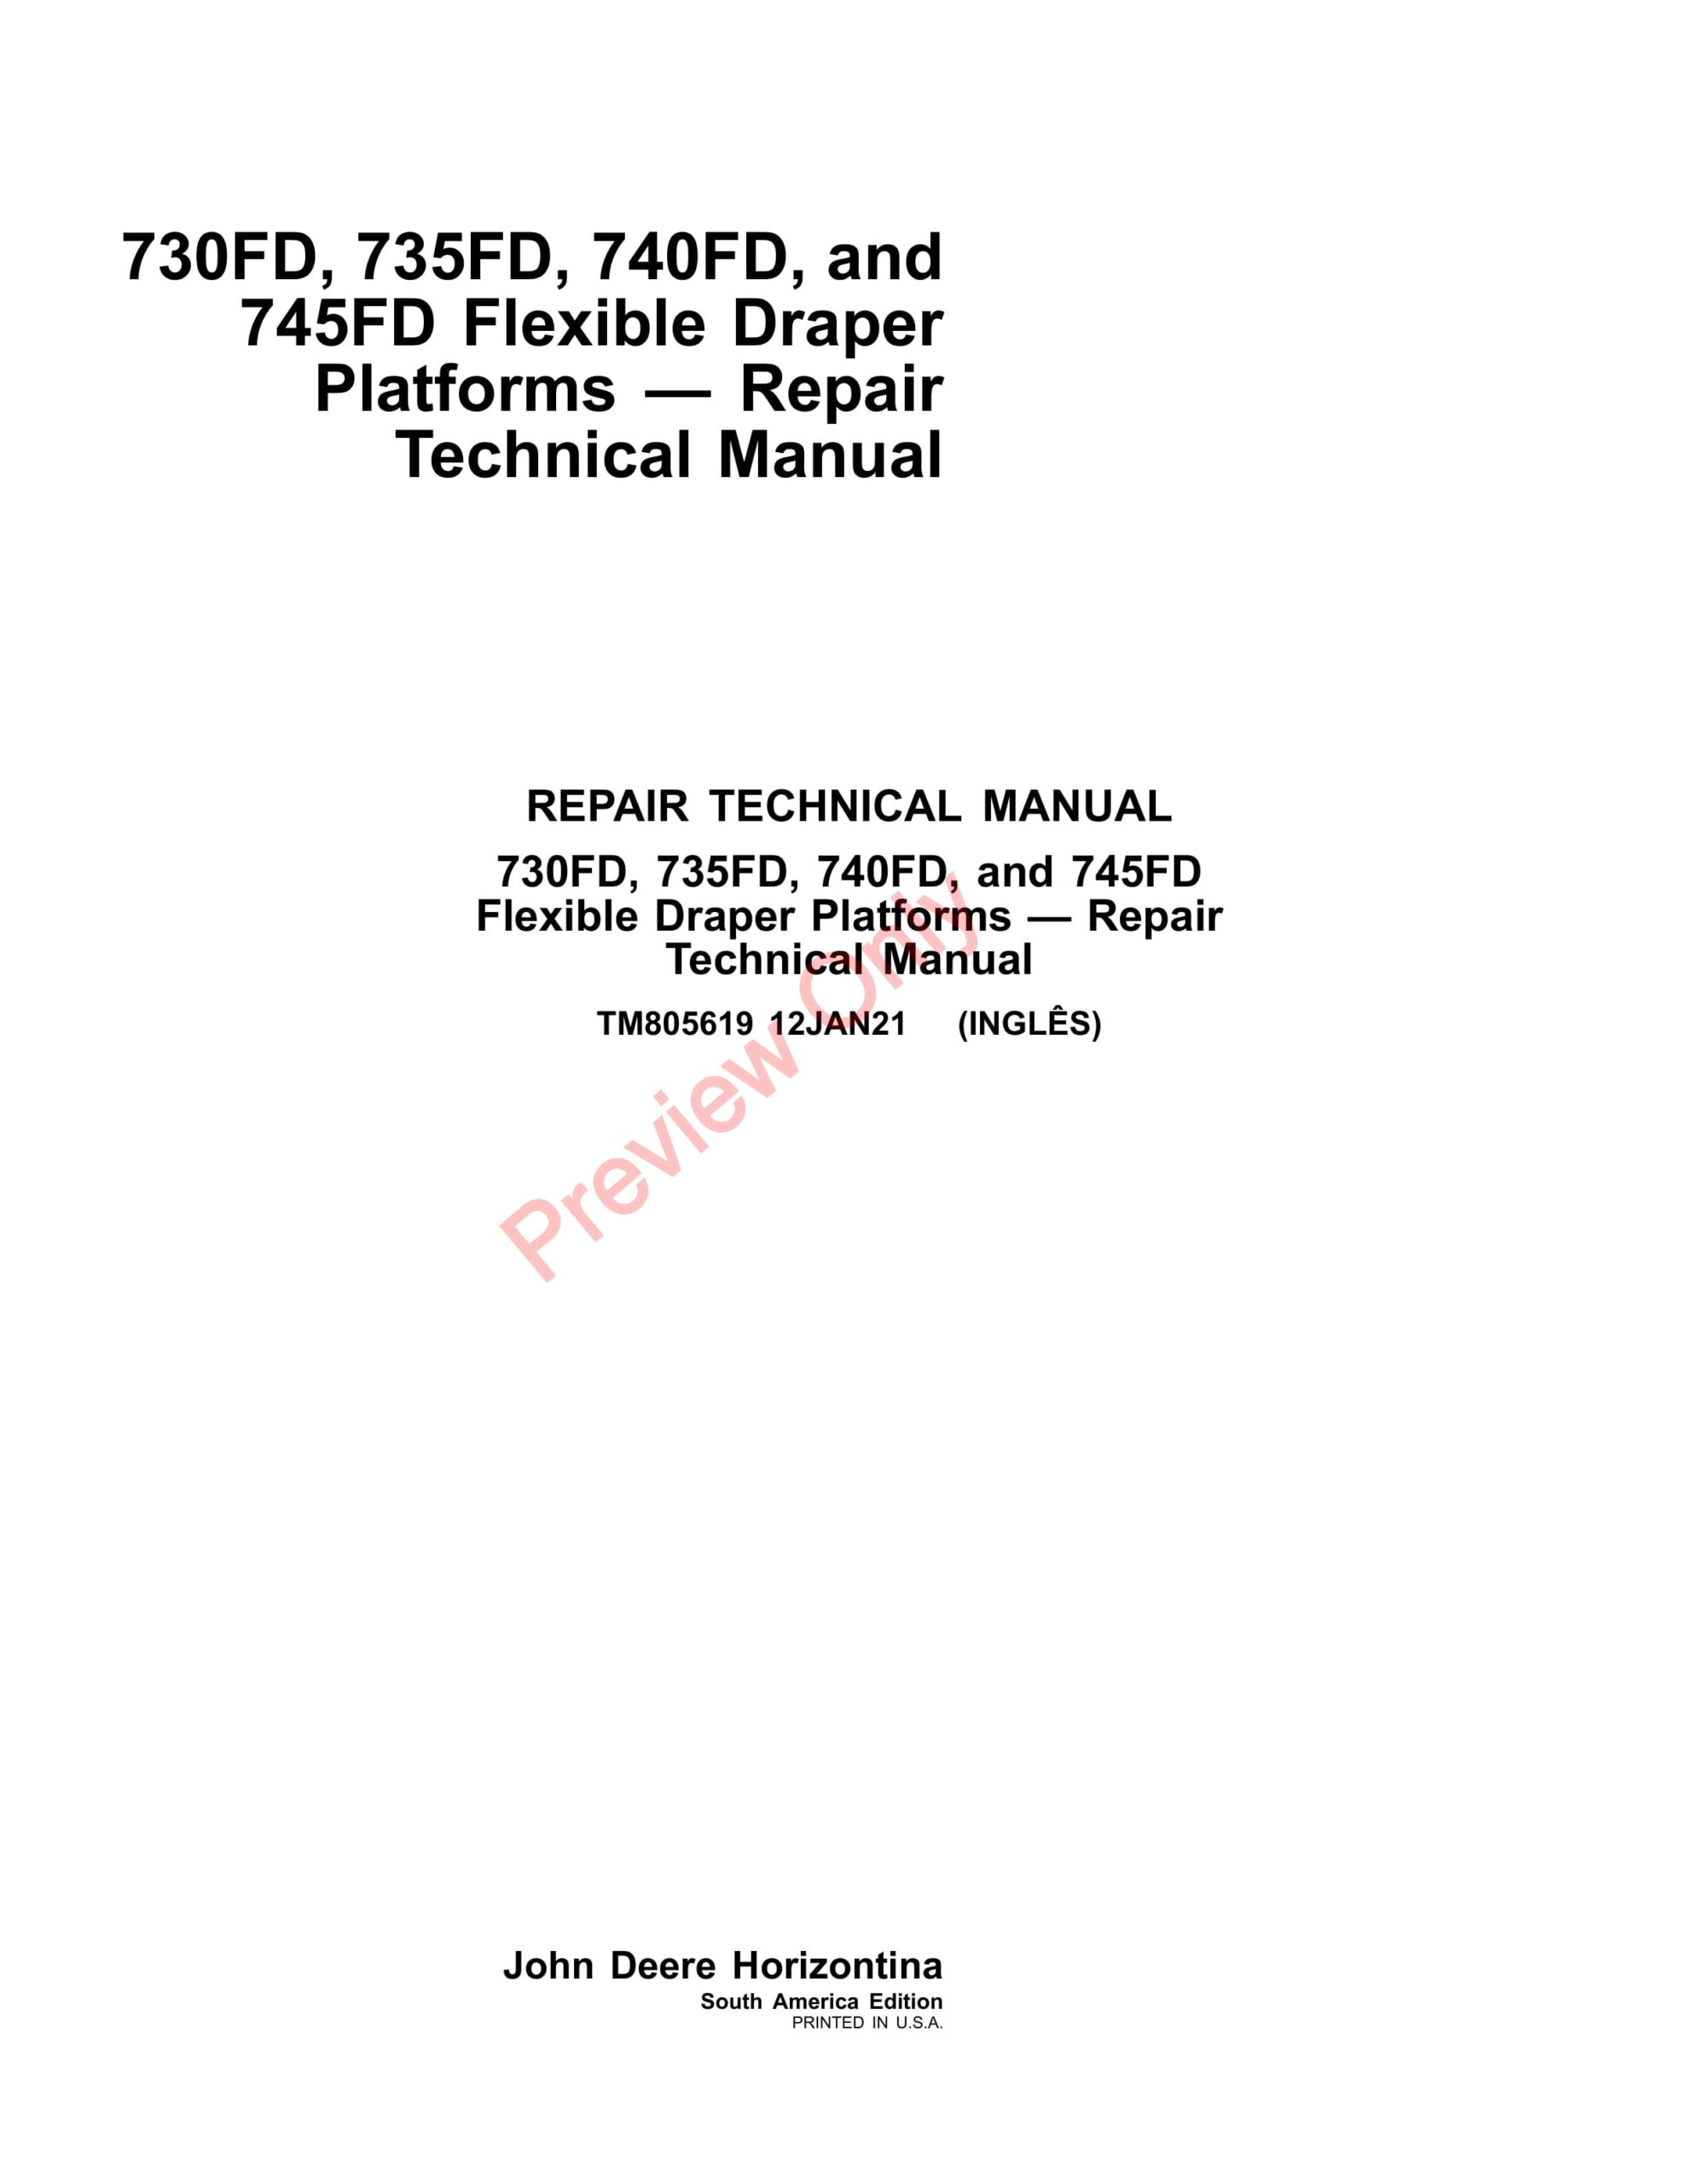 John Deere 730FD, 735FD, 740FD, and 745FD Flexible Draper Platforms Repair Technical Manual TM805619 12JAN21-1